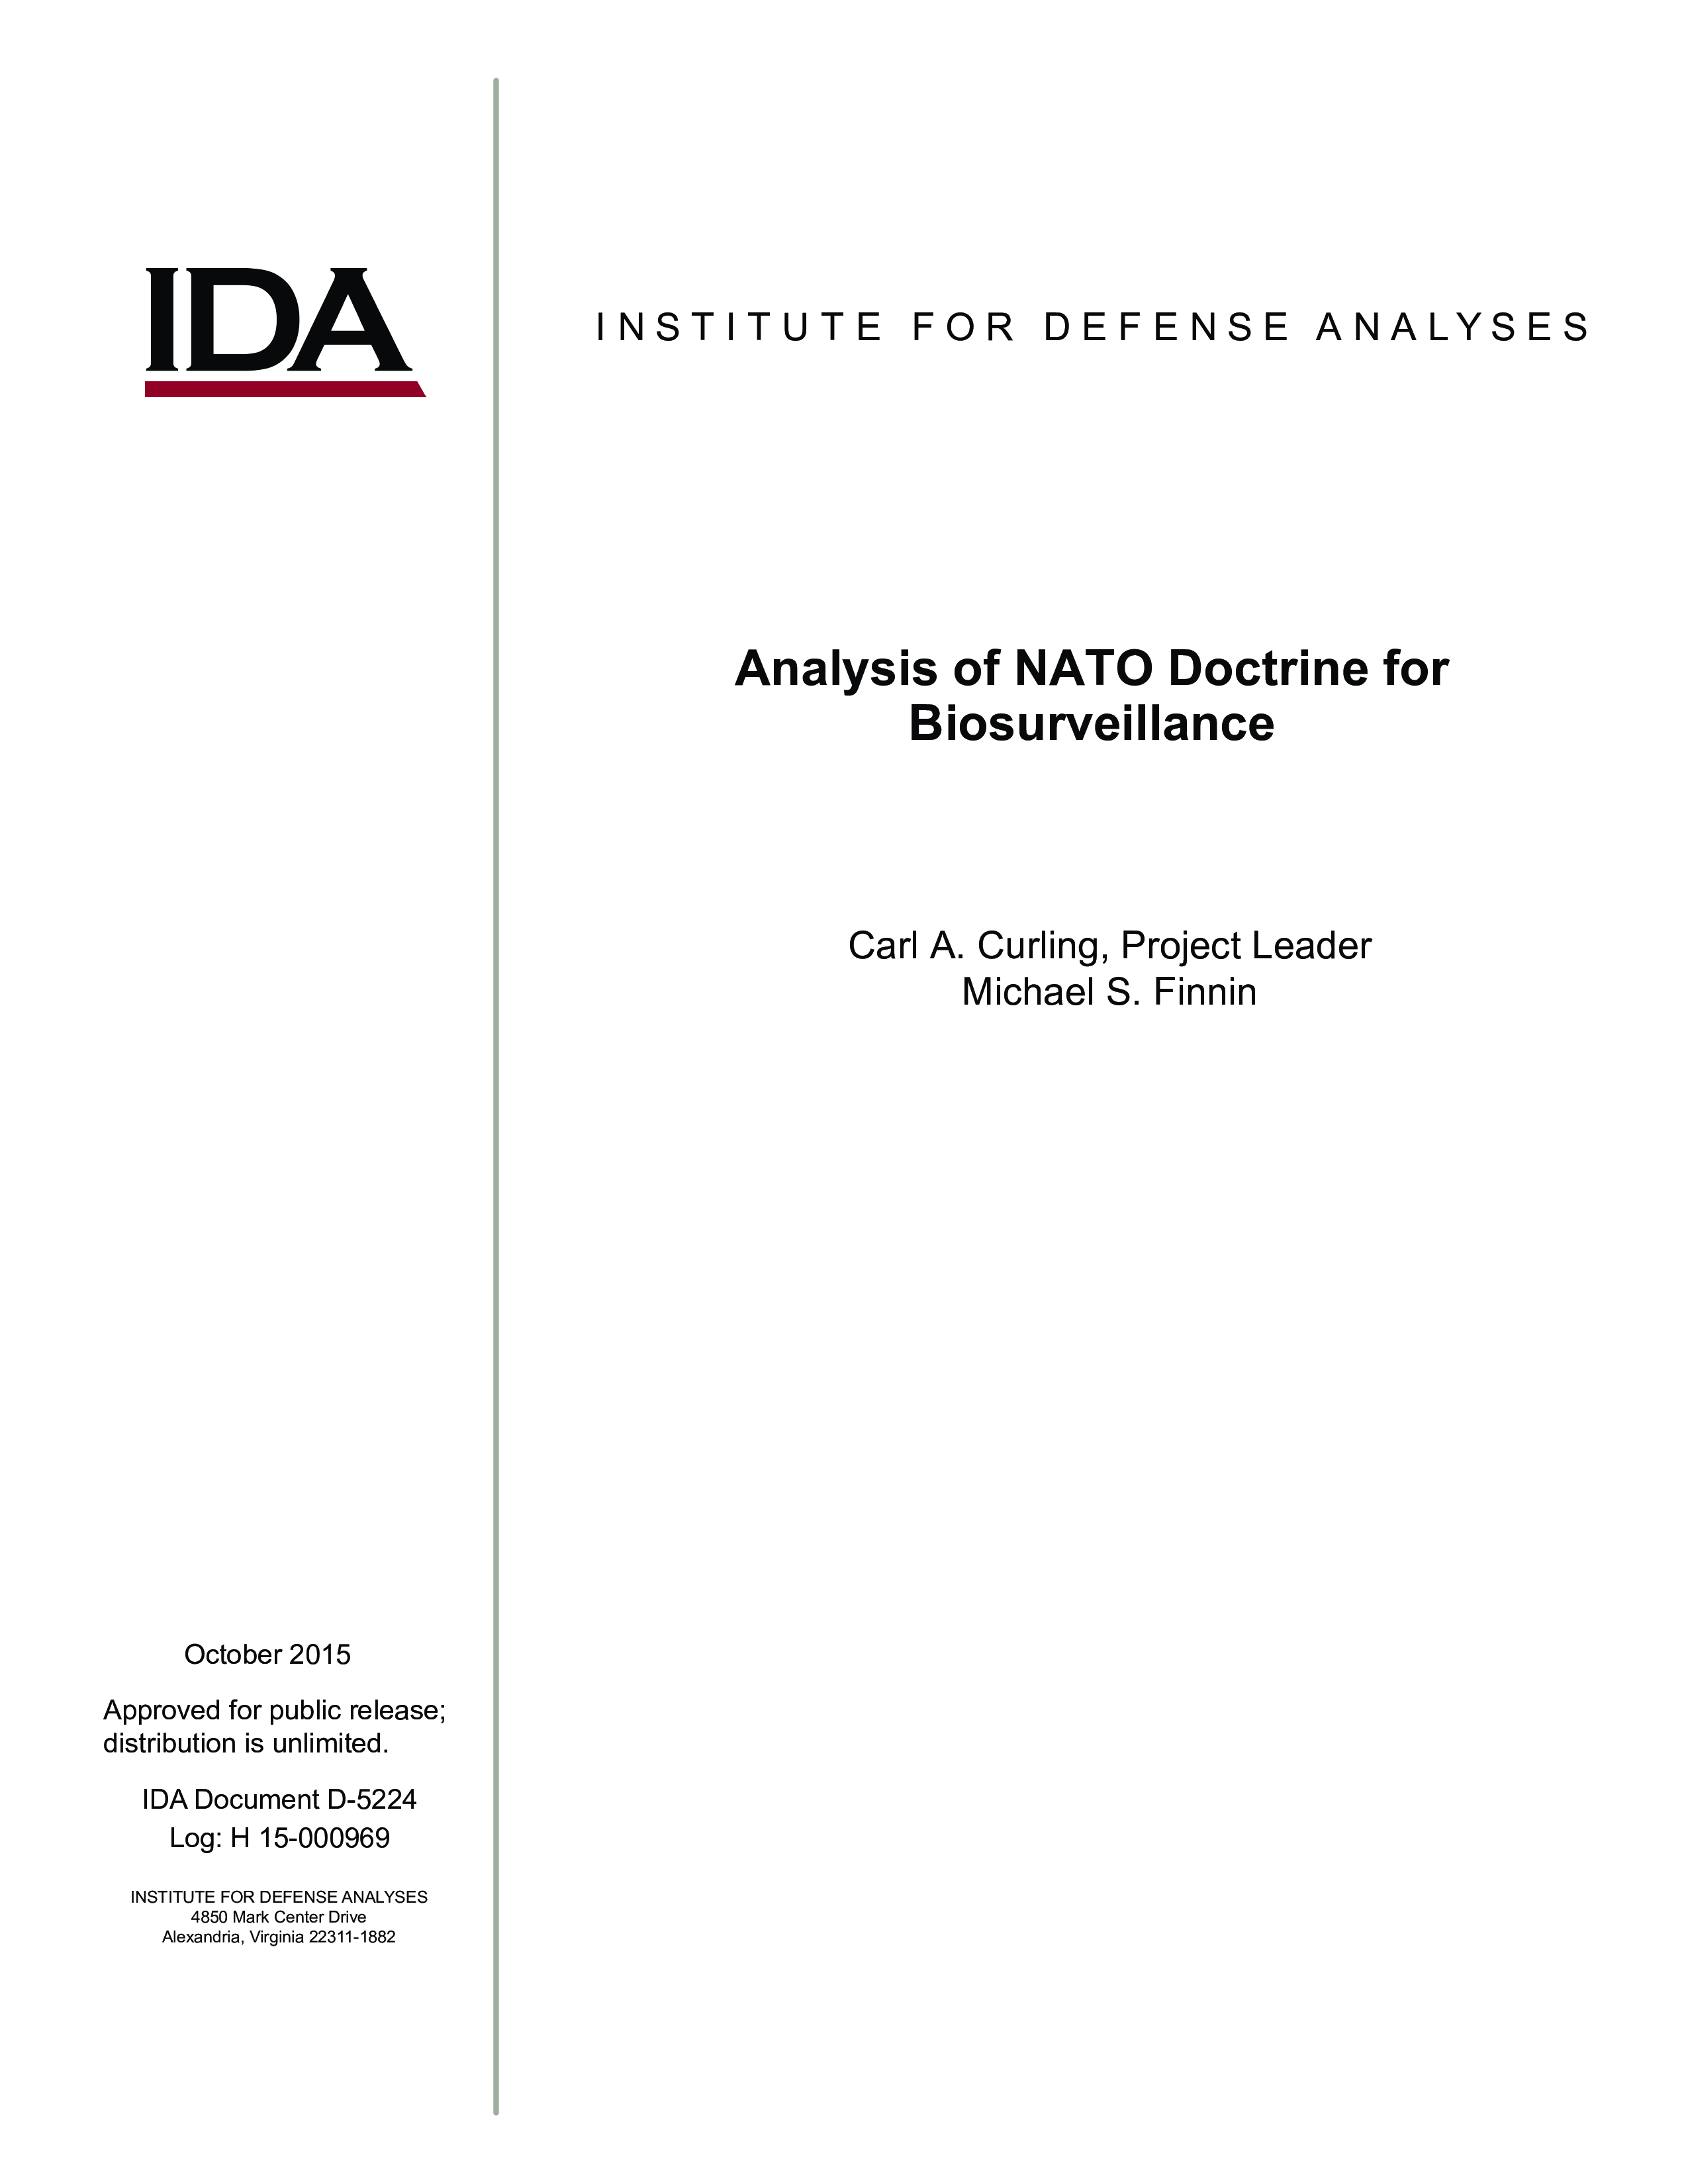 Analysis of NATO Doctrine for Biosurveillance